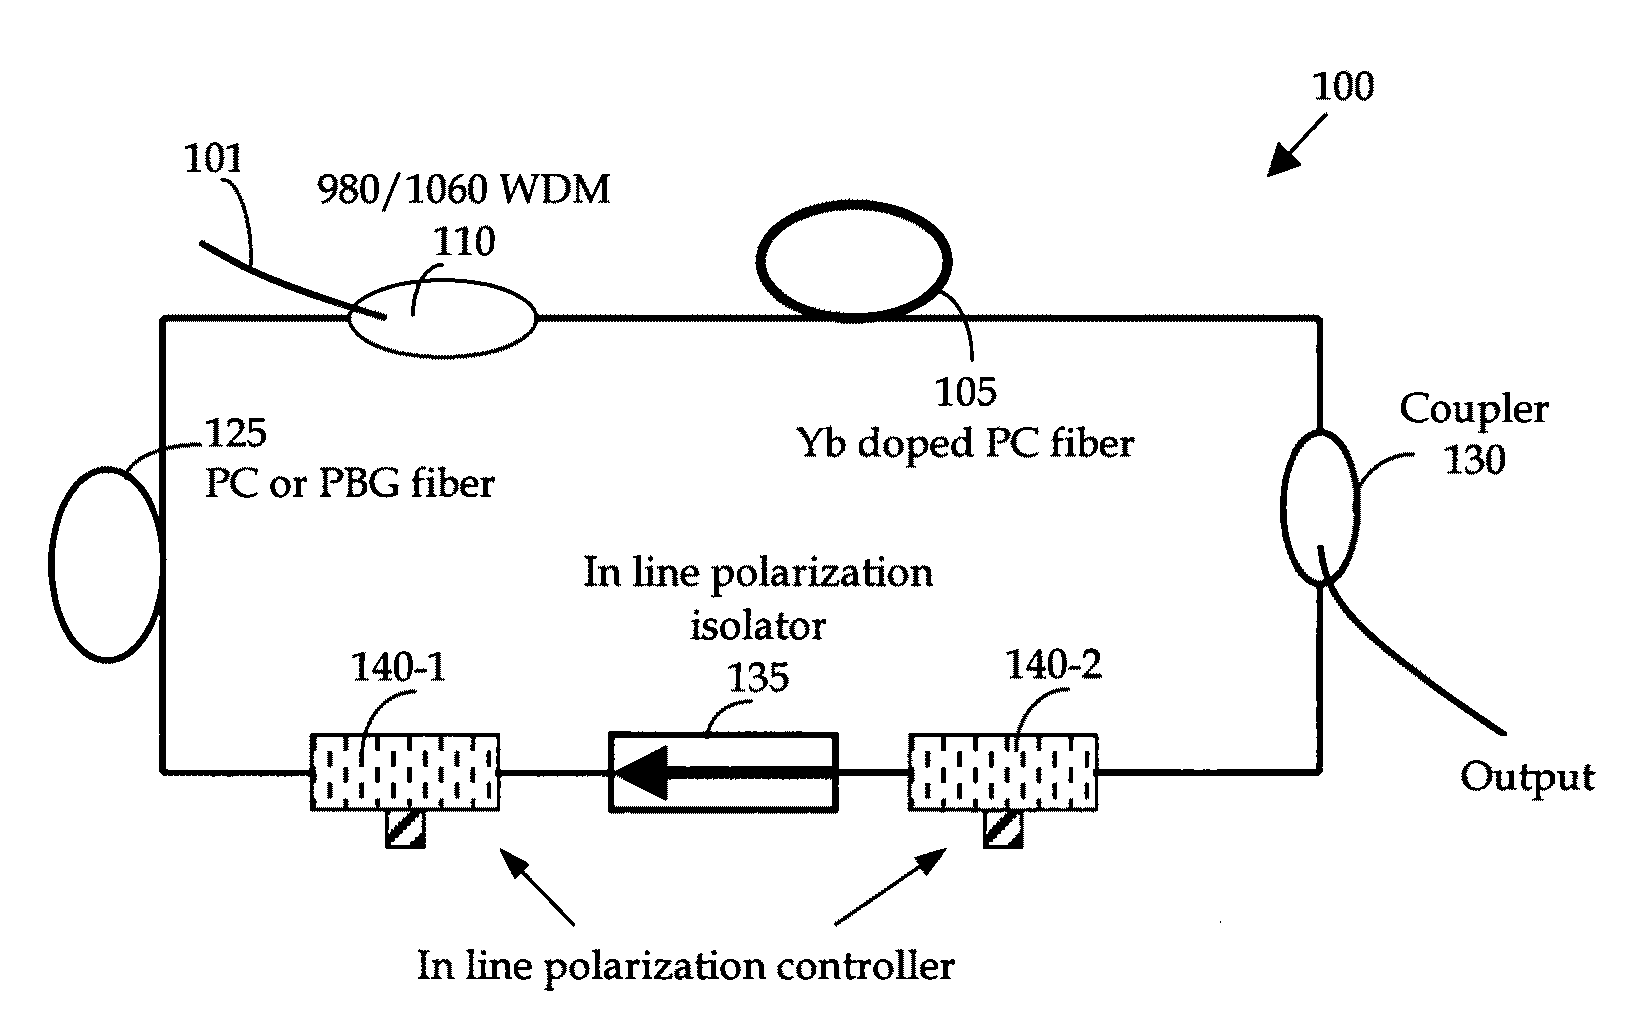 Nonlinear polarization pulse shaping model locked fiber laser at one micron with photonic crystal (PC), photonic bandgap (PBG), or higher order mode (HOM) fiber